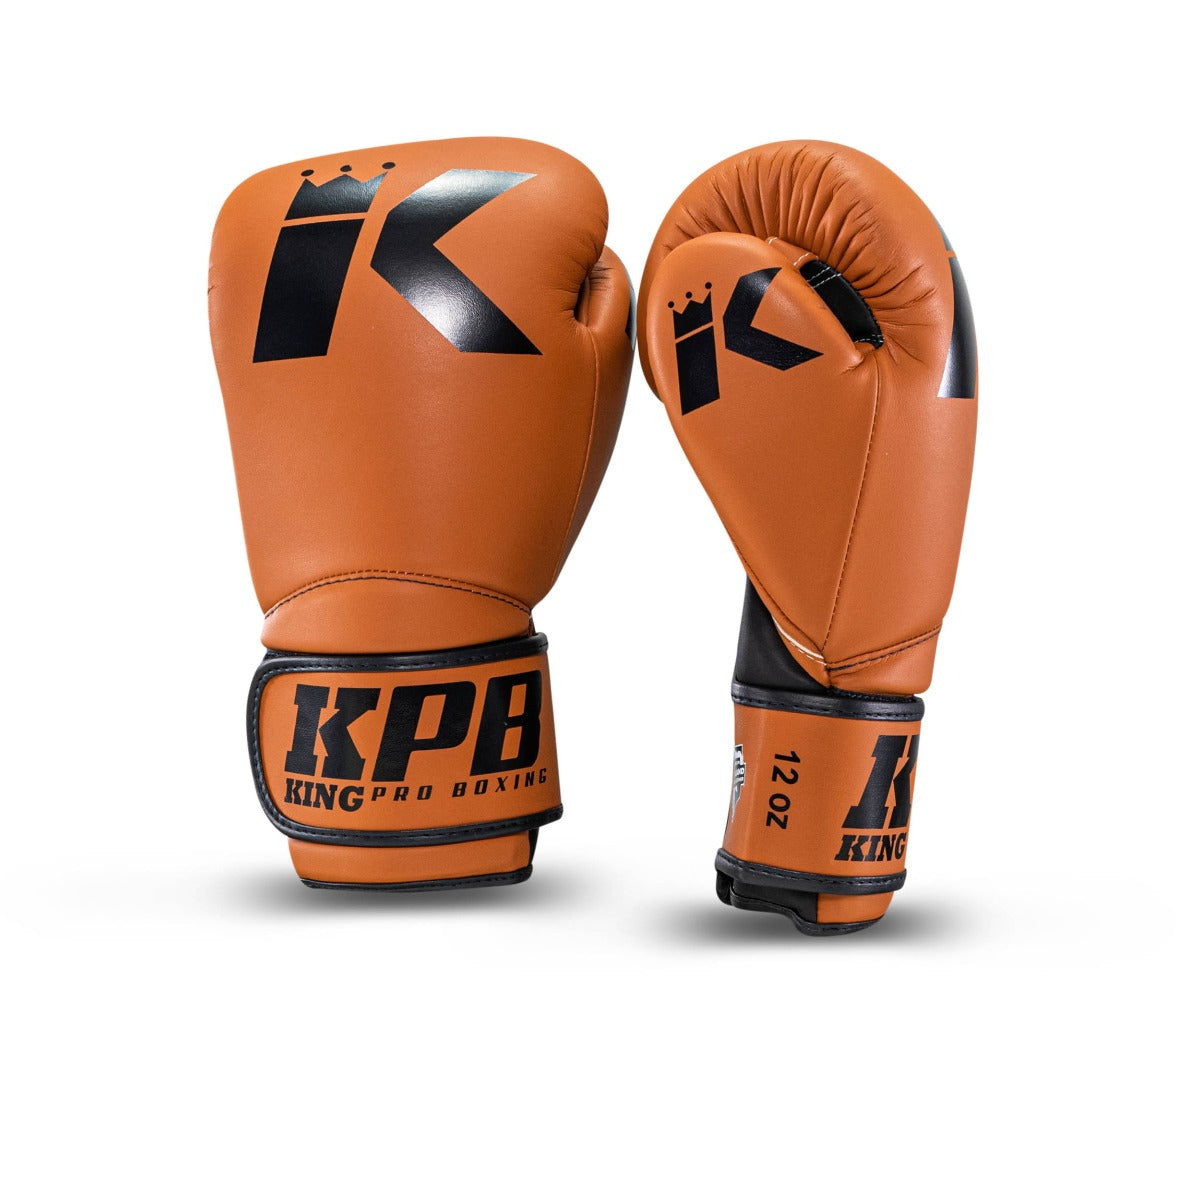 King PRO boxing boxing gloves - BGK 3